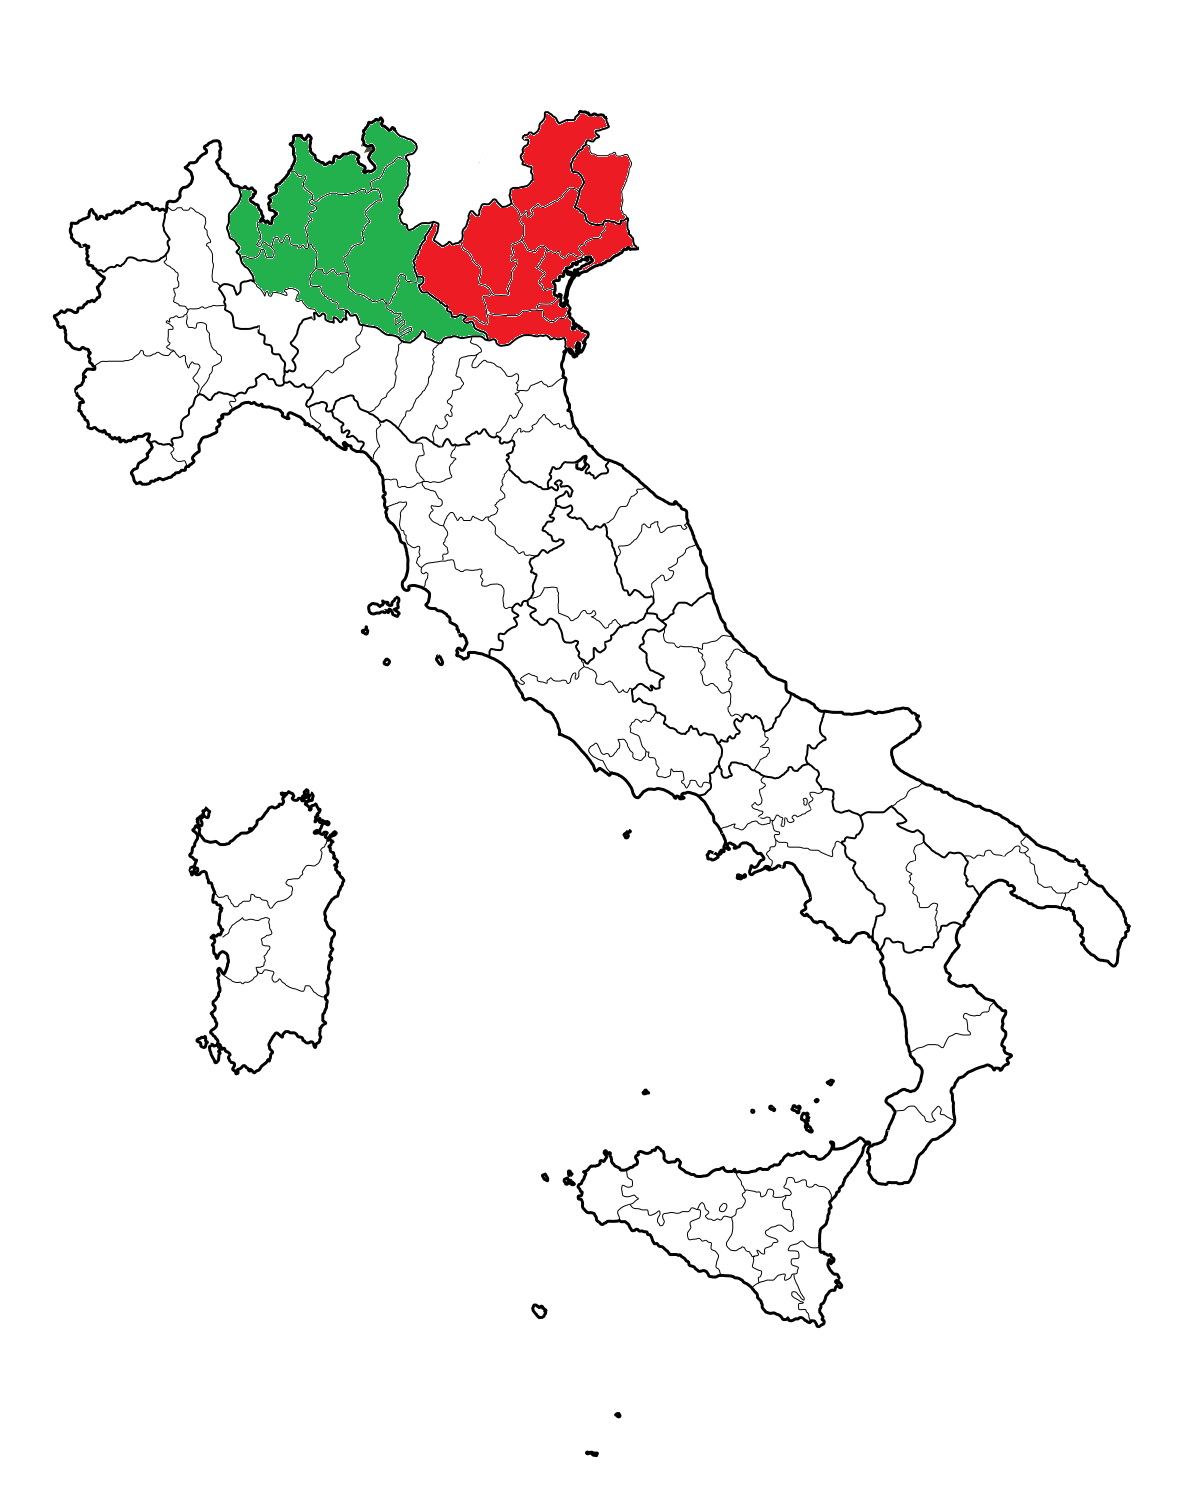 ATL Treaty of Livorno.png